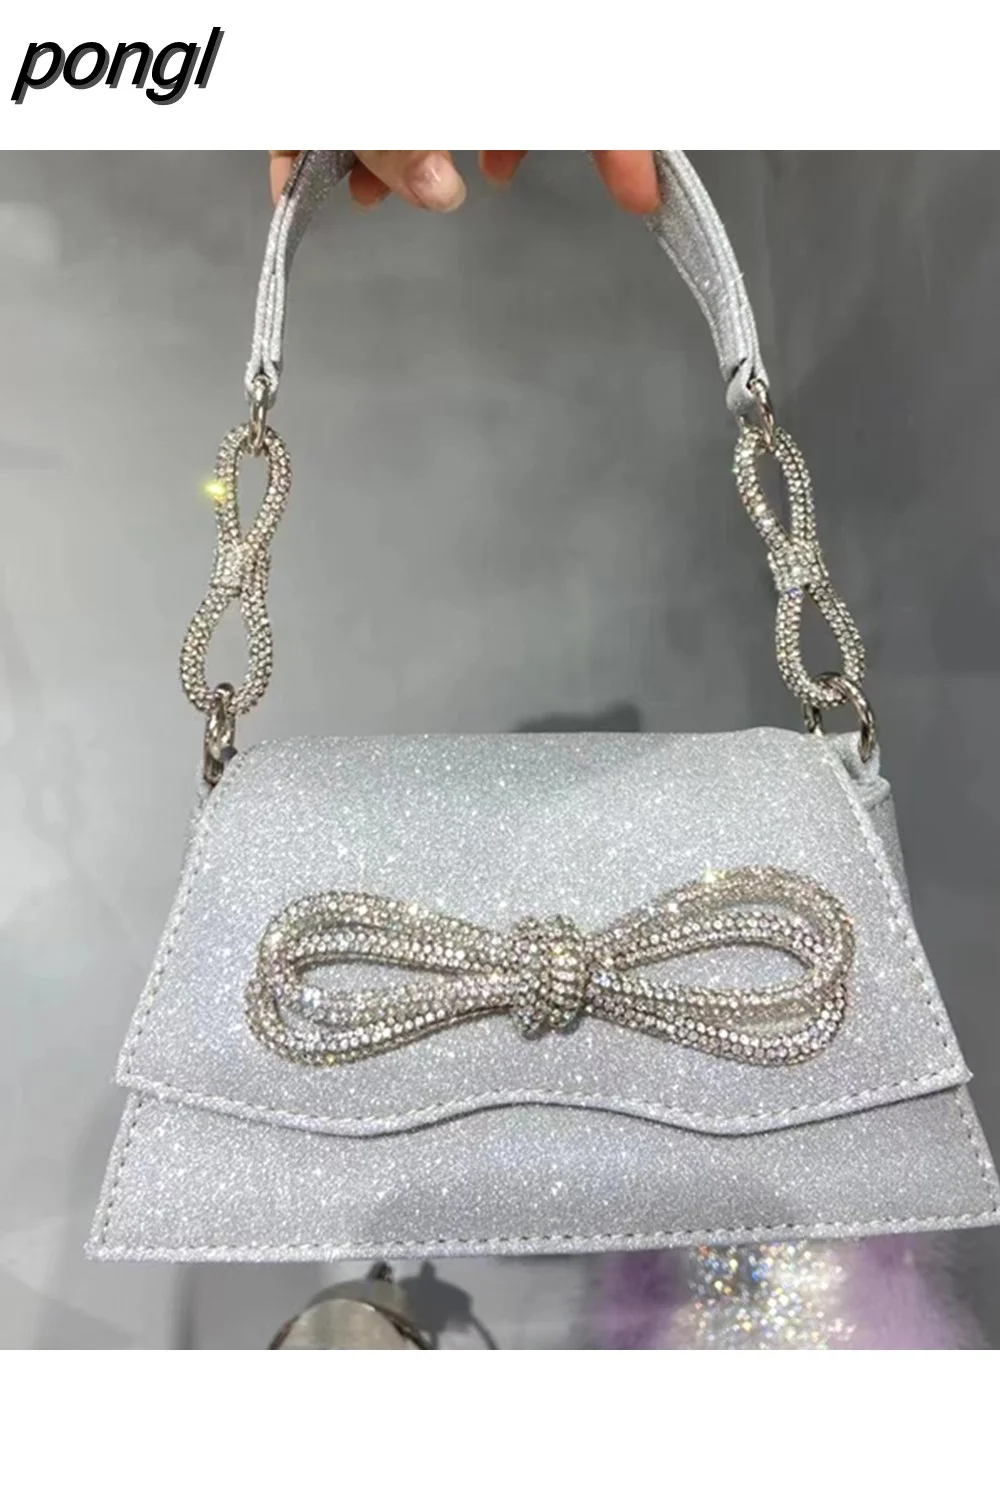 pongl Diamonds Bow Women Handbags Designer Satin Shoulder Crossbody Bags Luxury Shinny Evening Bag Elegant Party Small Purses